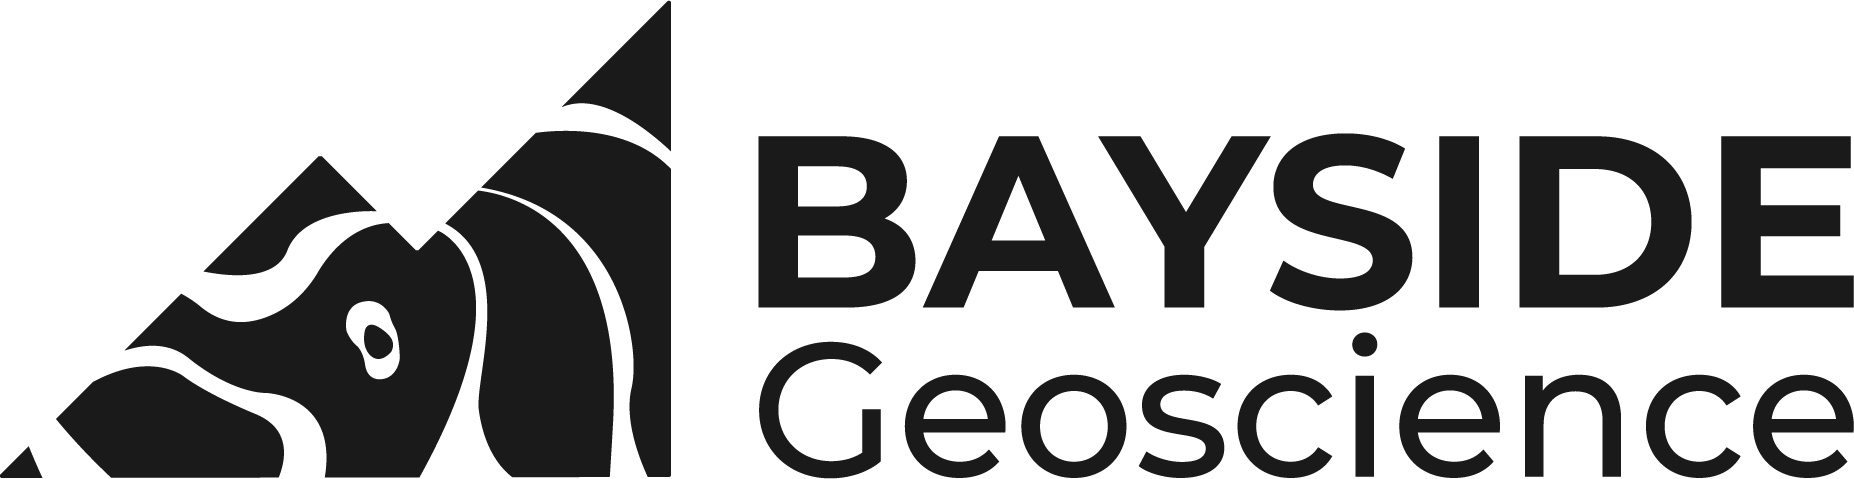 Bayside Geoscience